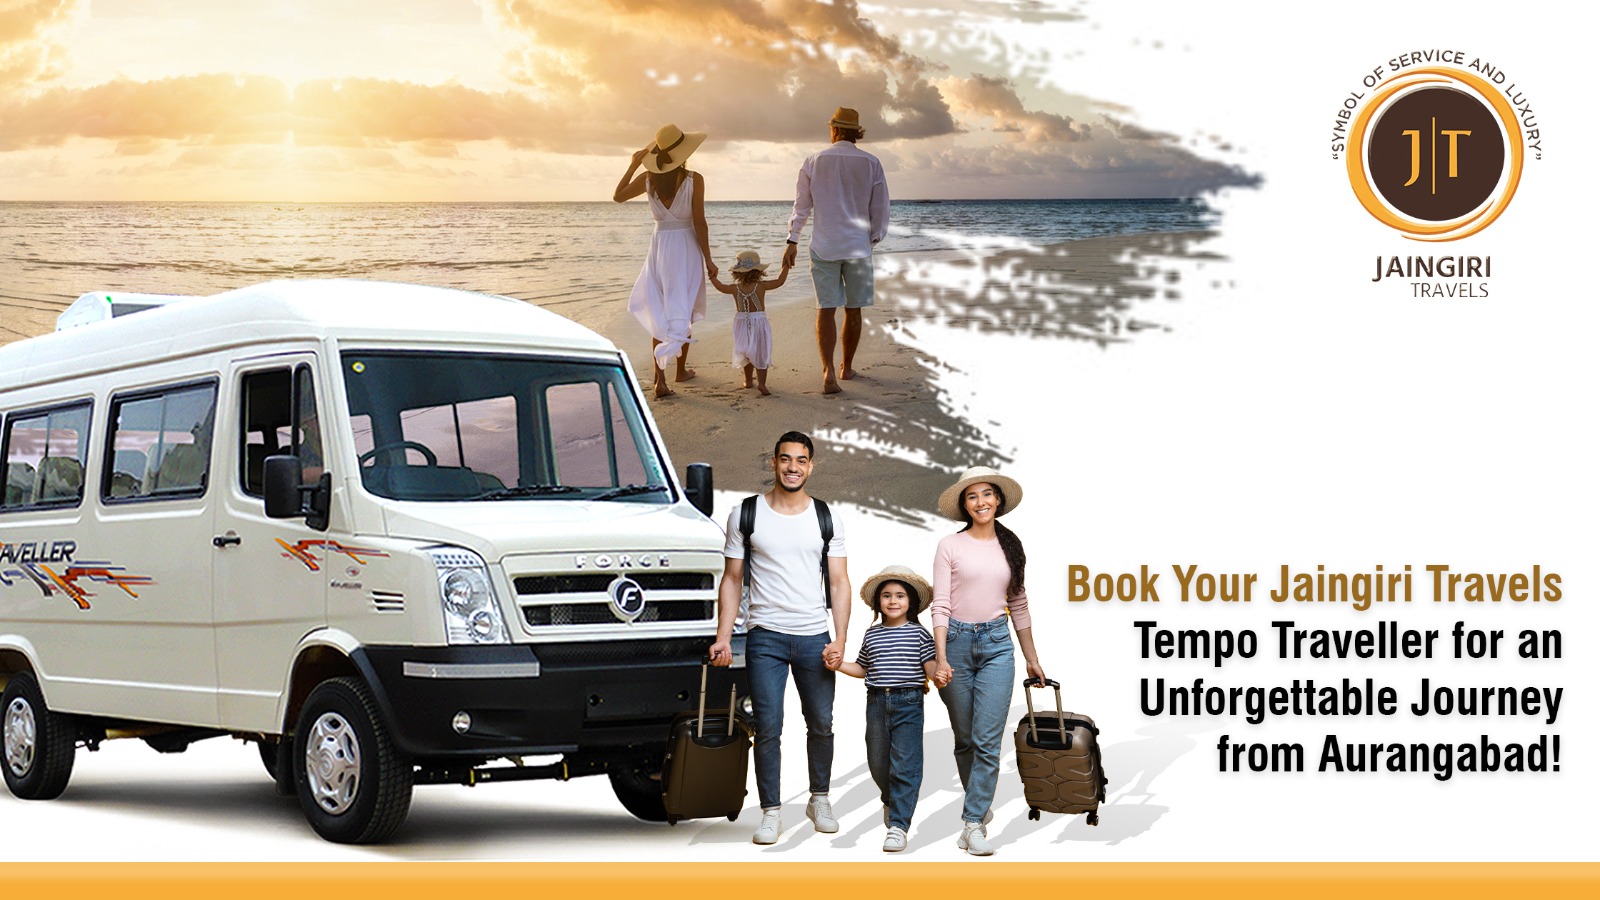 Book Your Jaingiri Travels Tempo Traveller for an Unforgettable Journey from Aurangabad!